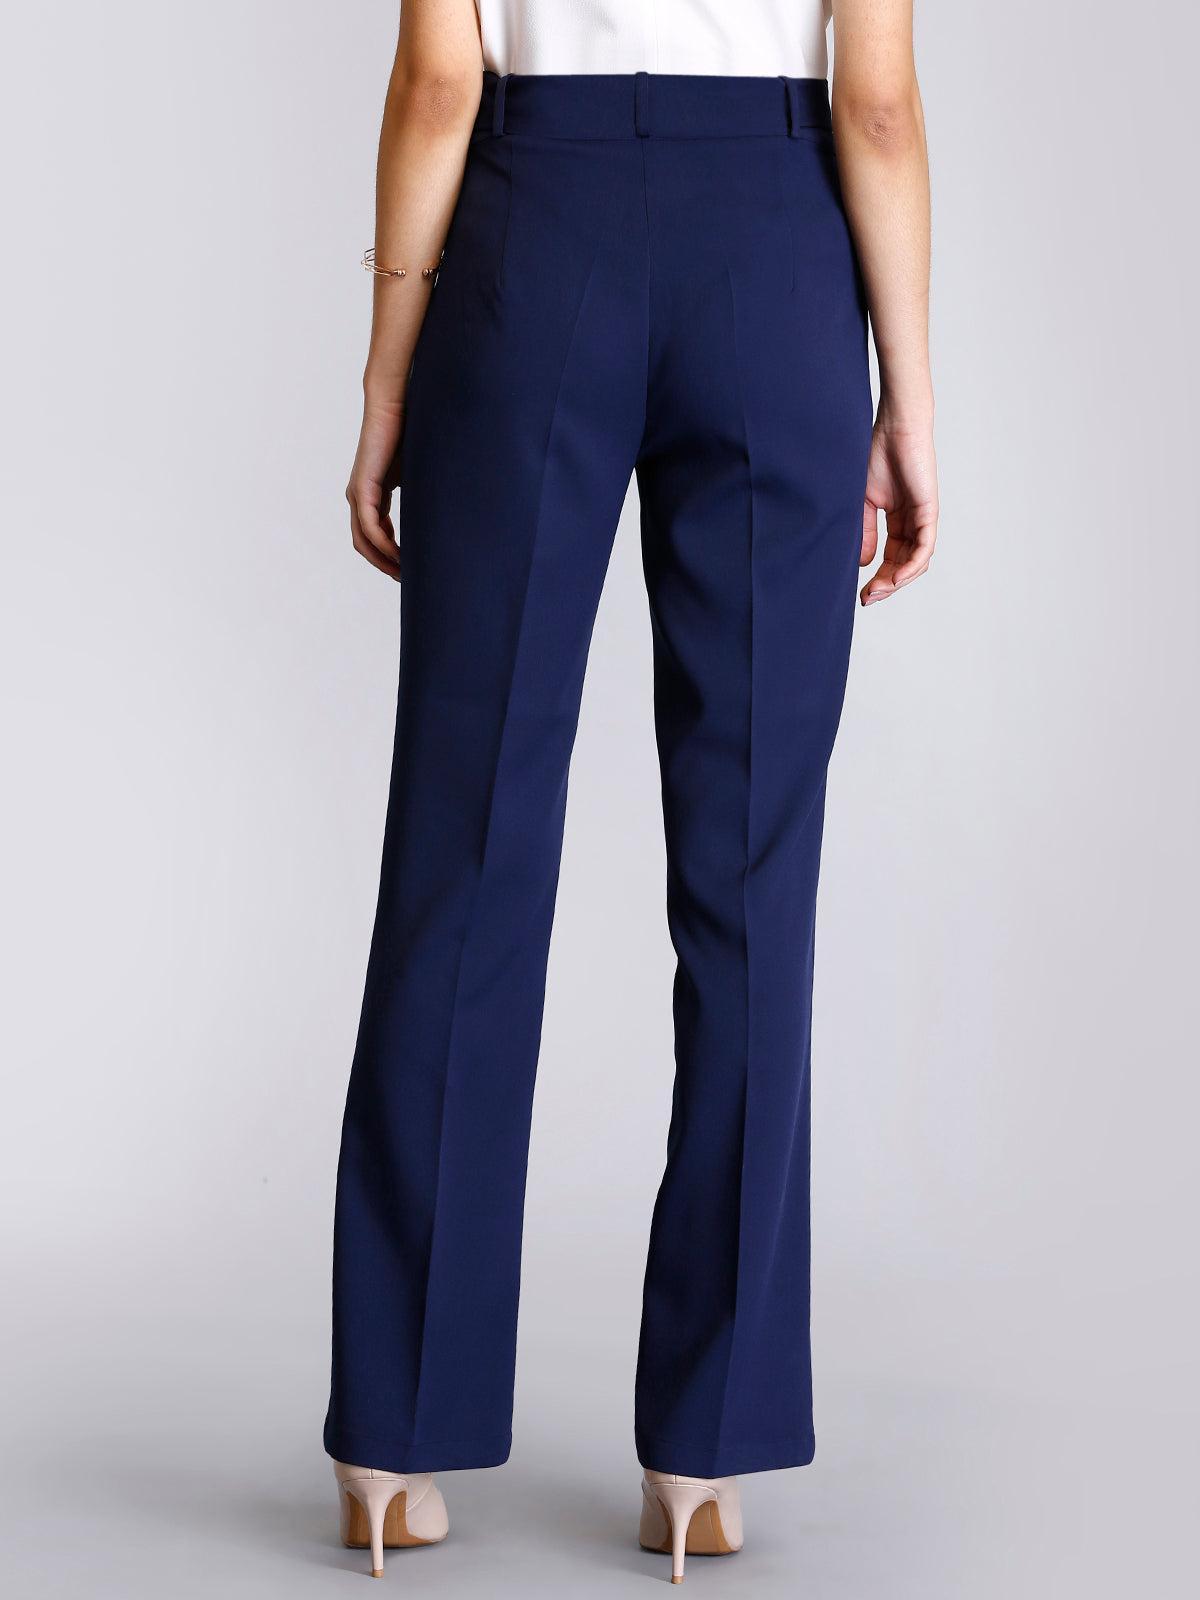 High Waist Pants - Navy| Formal Trousers